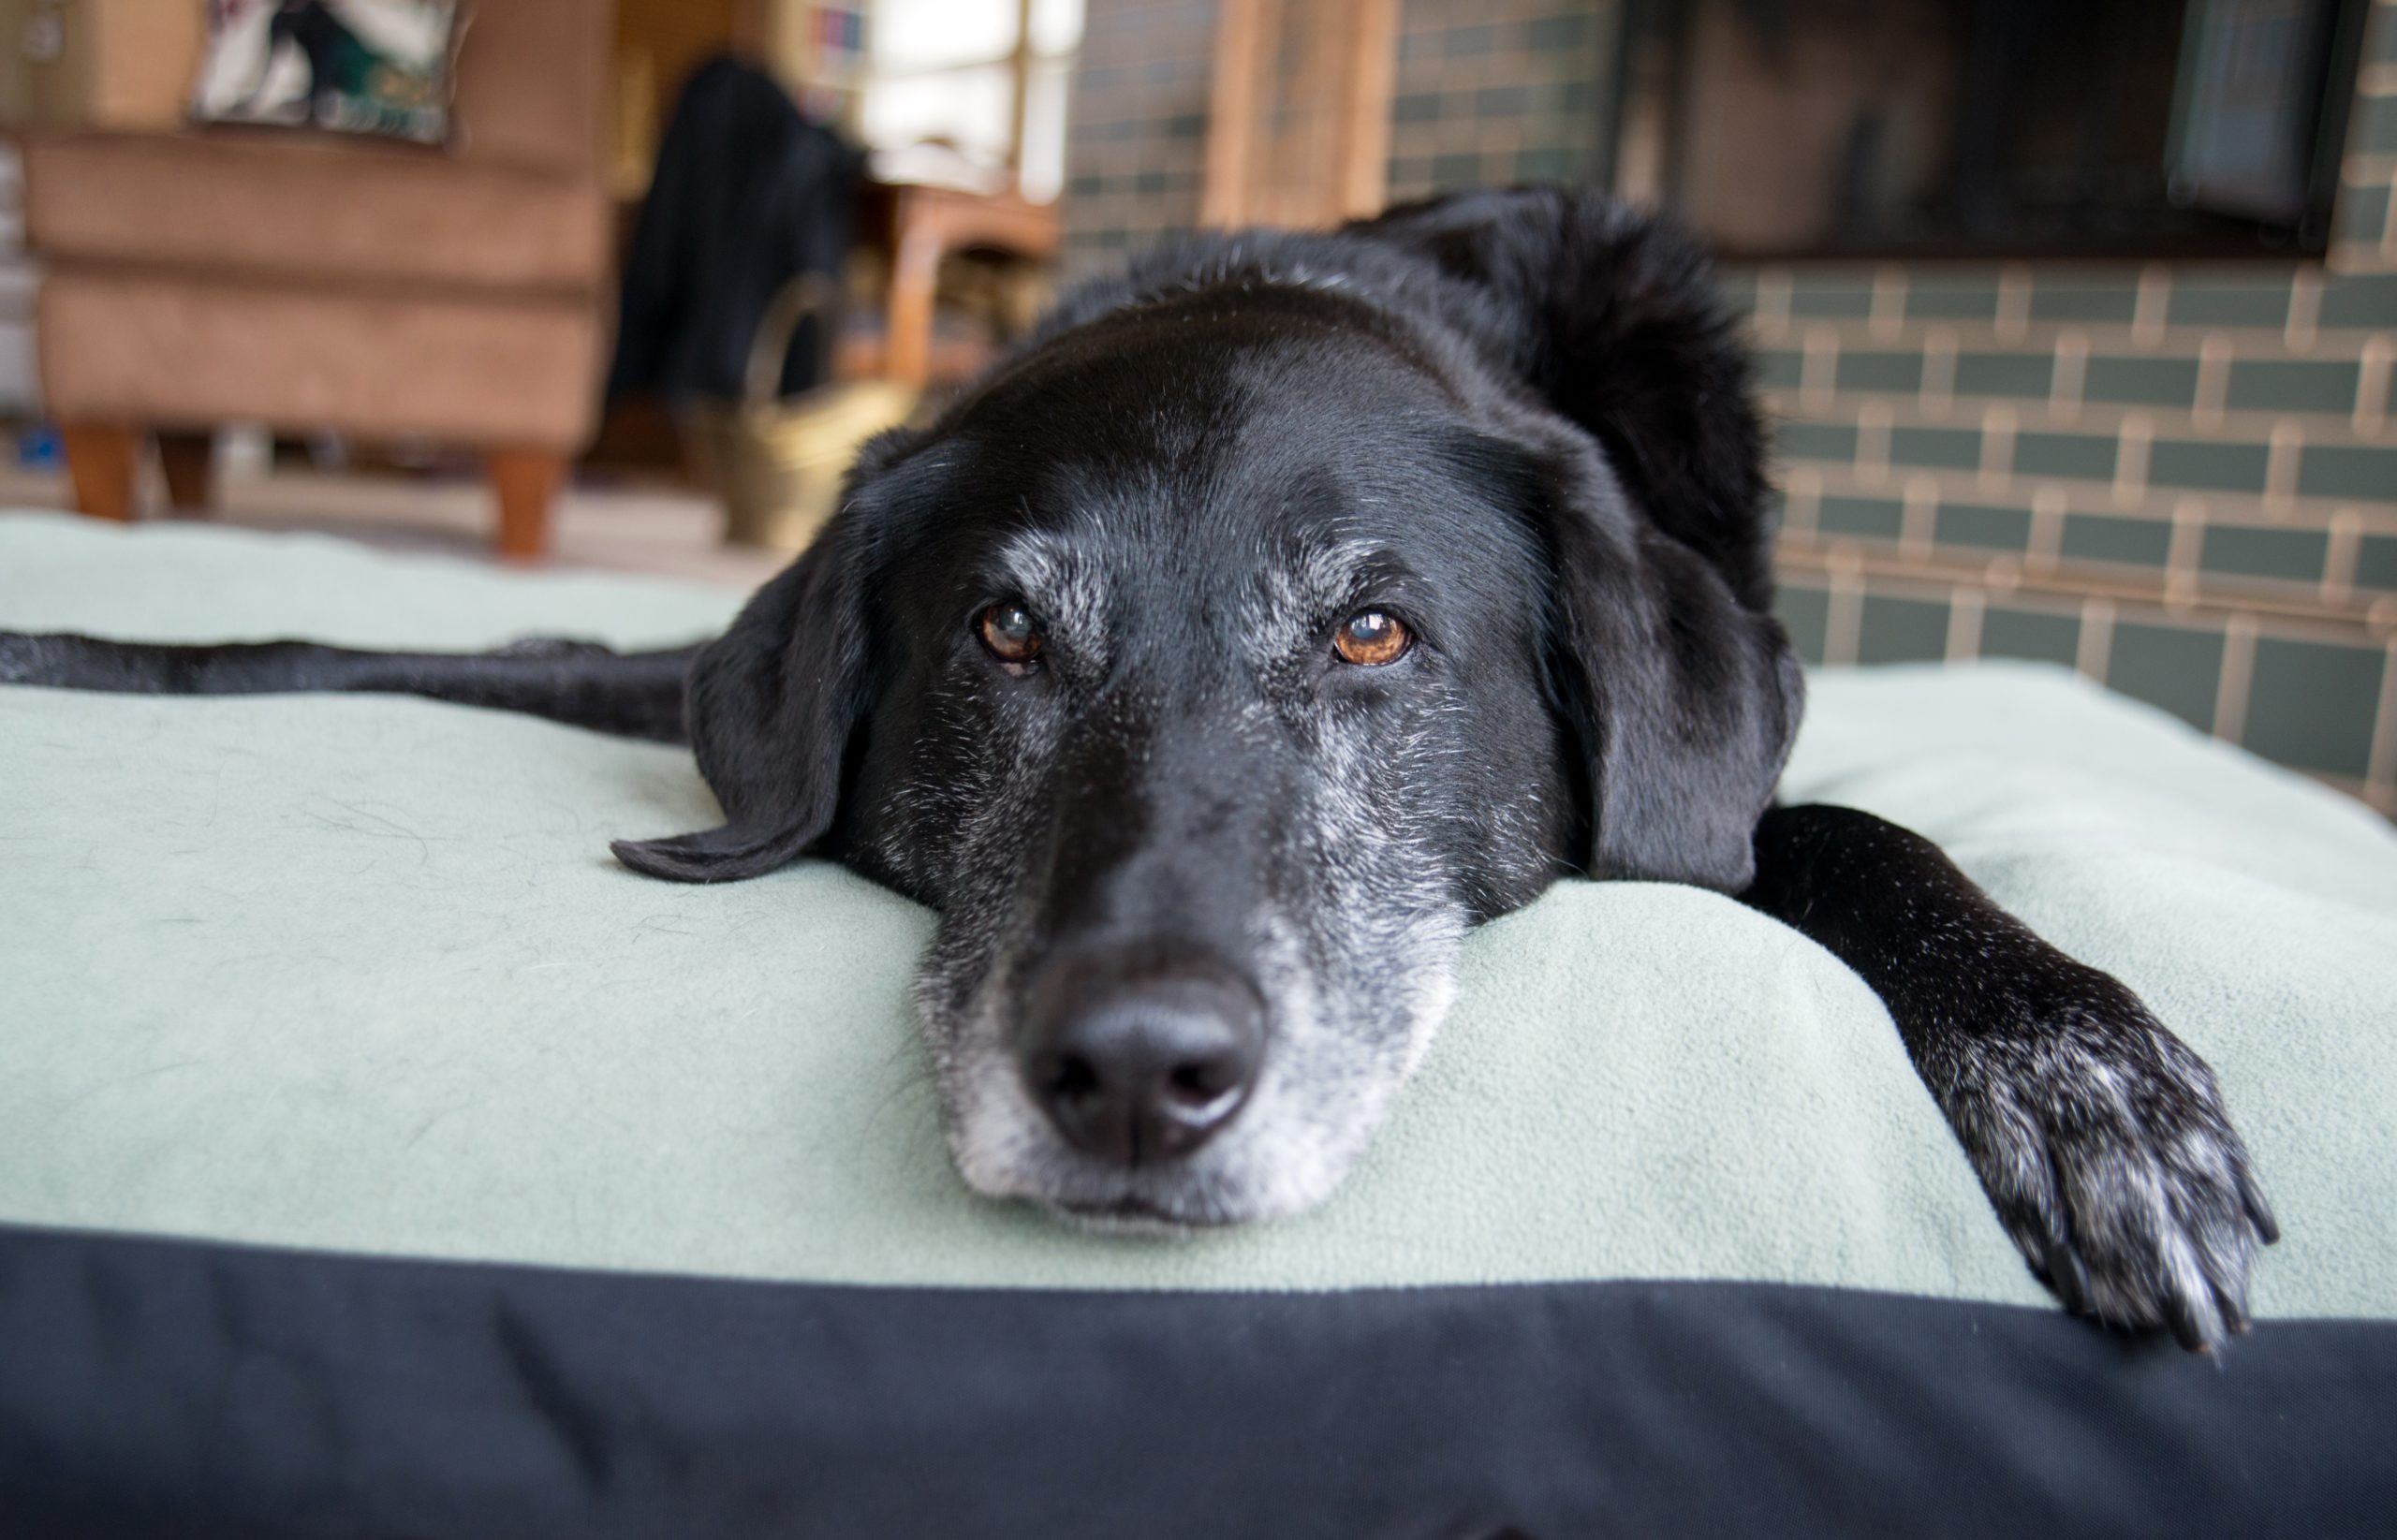 7 Reasons Why You Should Adopt the Senior Dog at the Shelter